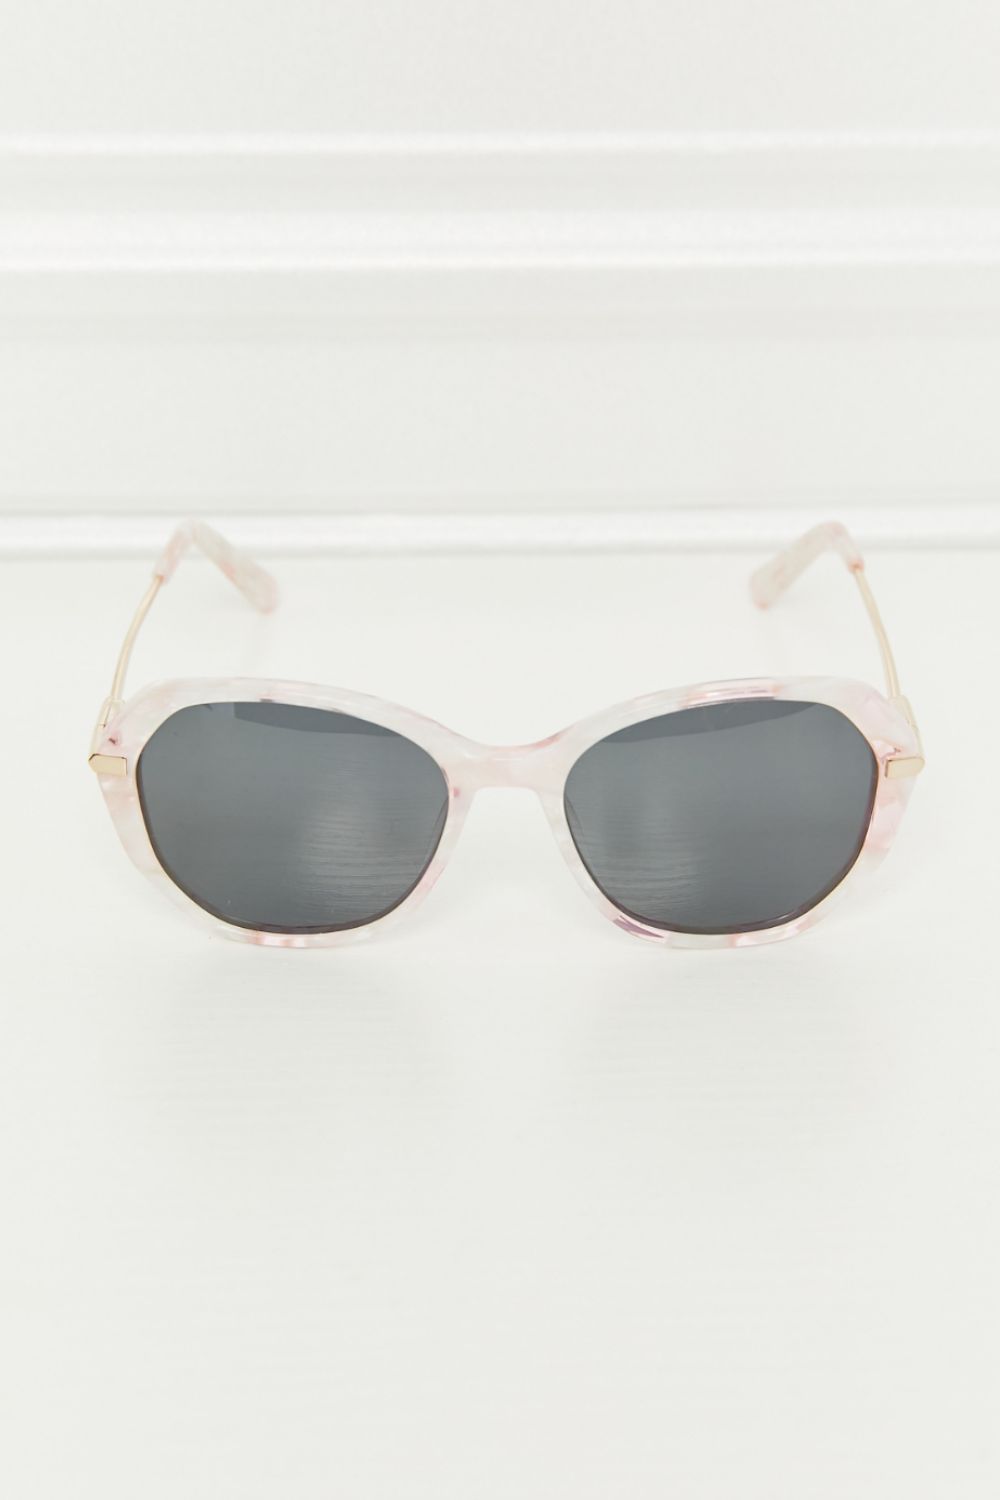 Glam TAC Polarization Lens Sunglasses - Sunglasses - FITGGINS